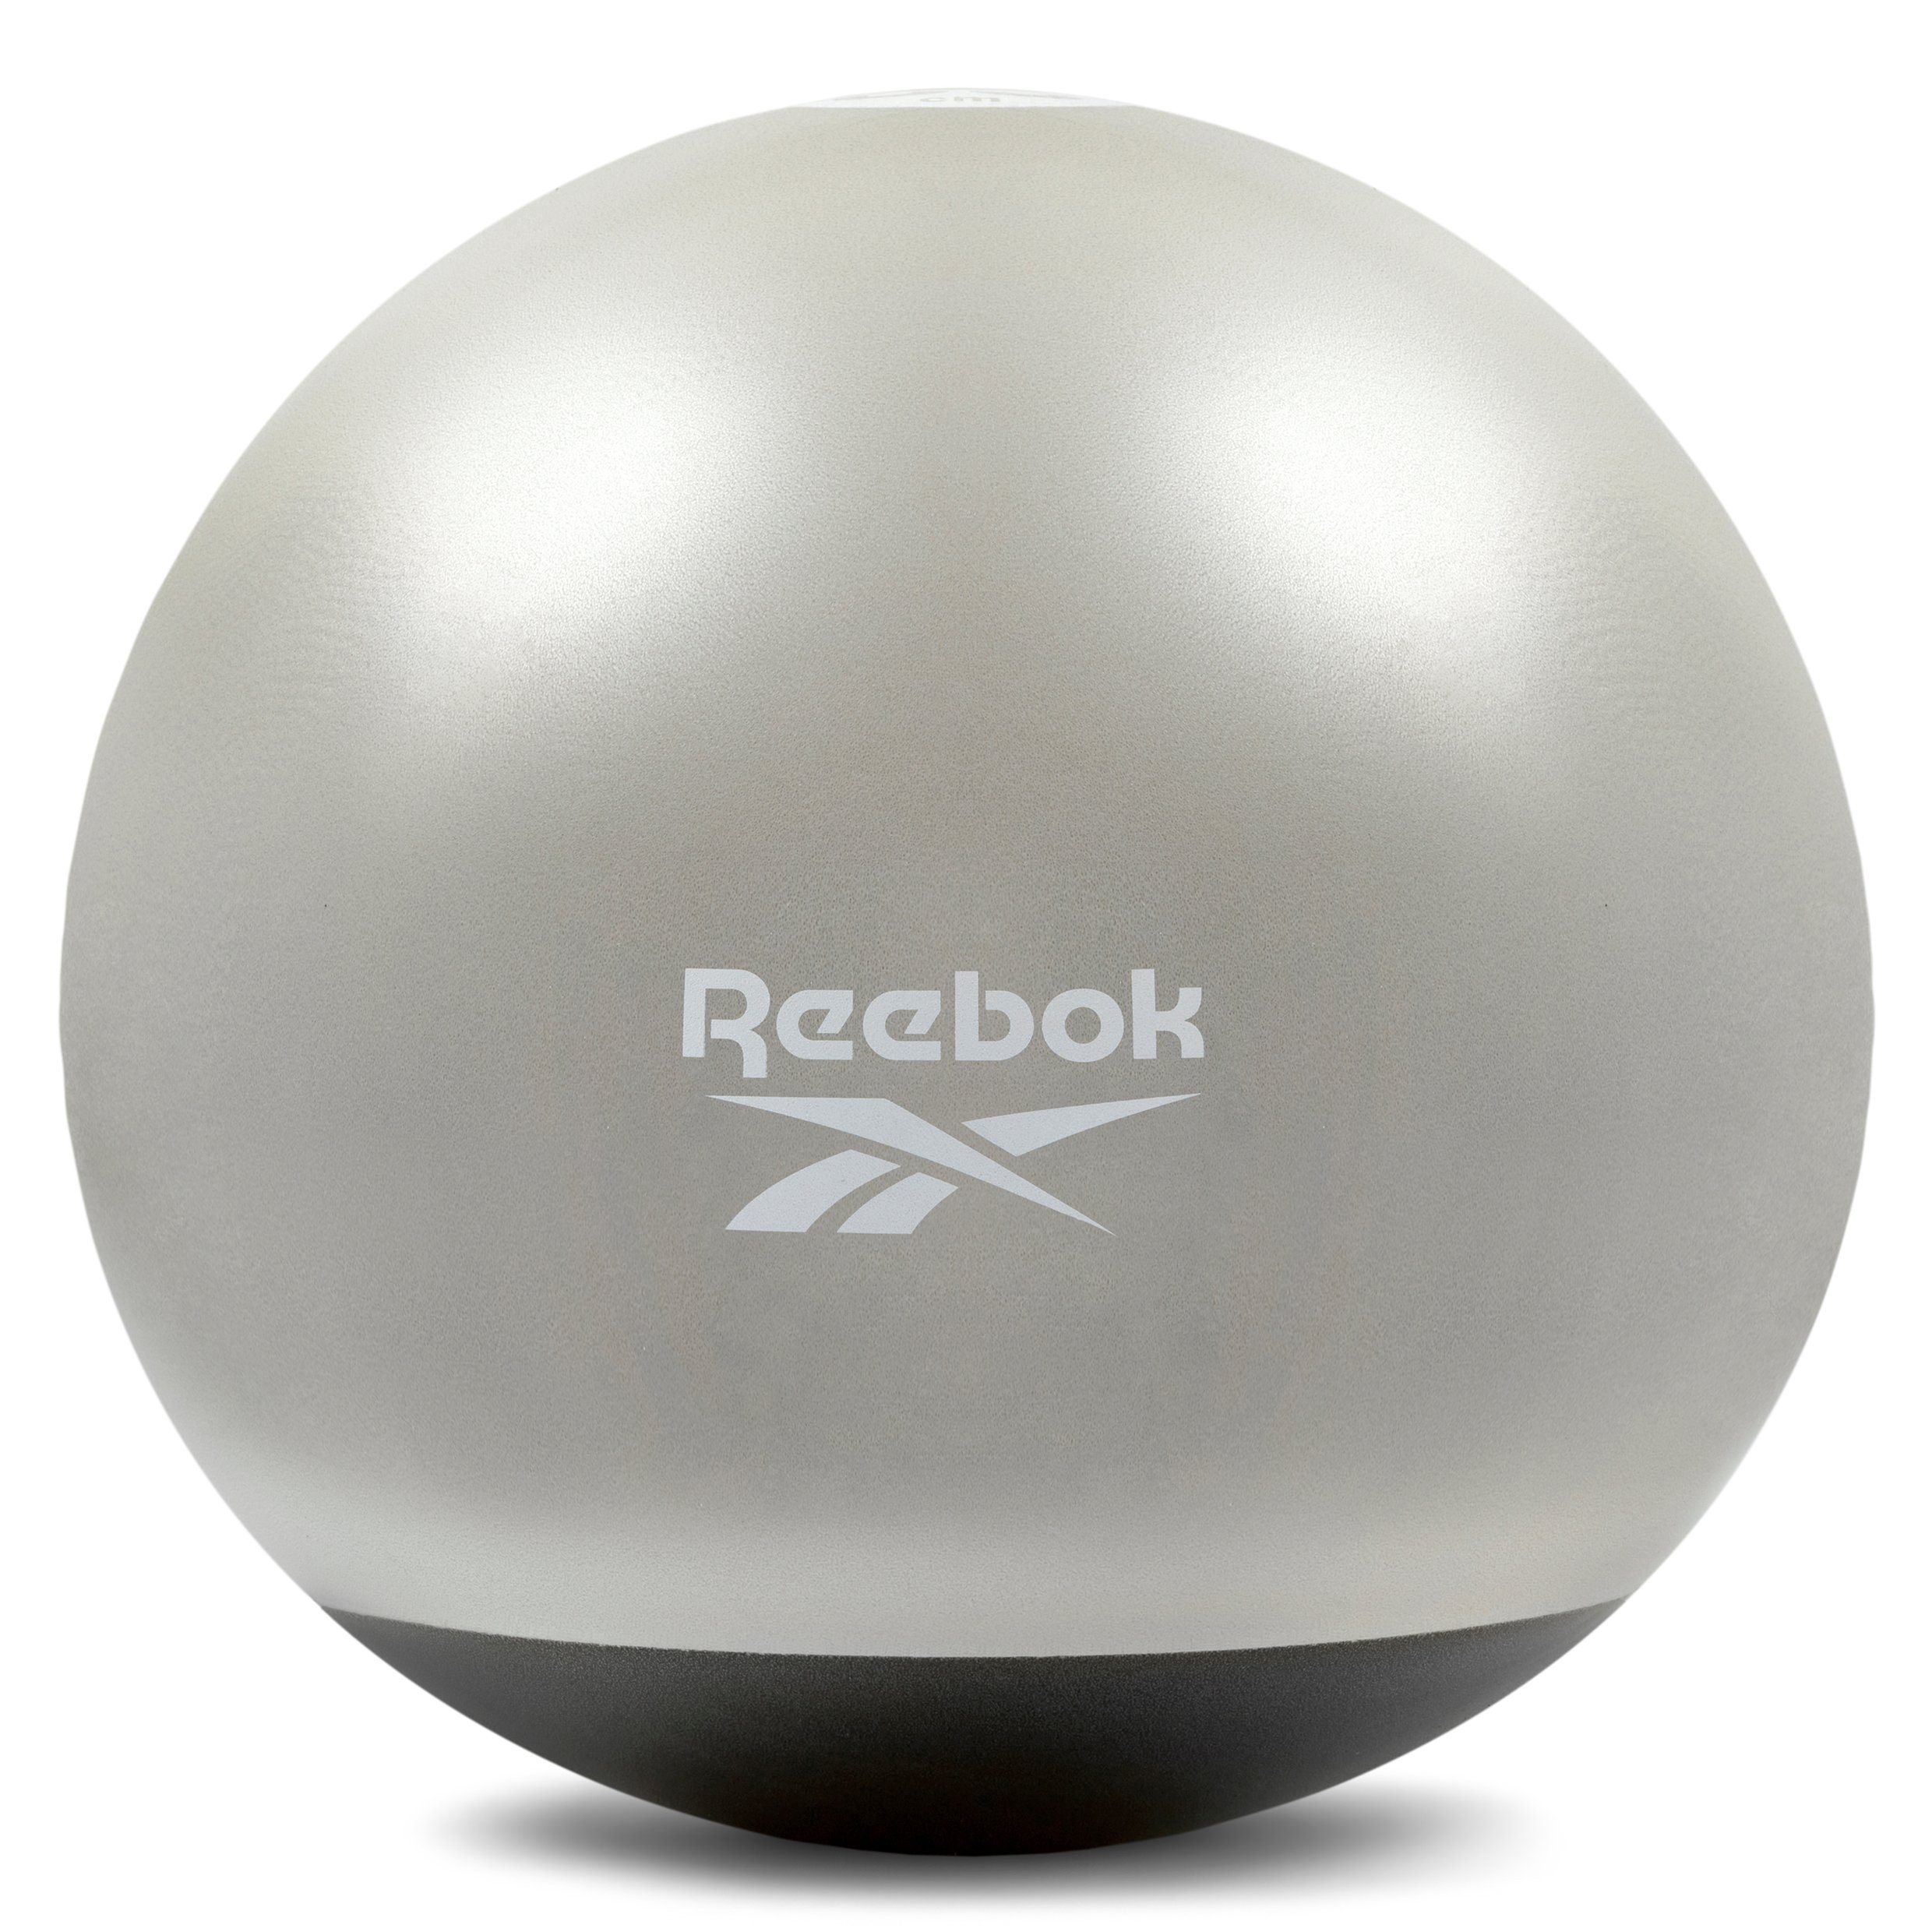 Gymnastikball Reebok cm, Ø Stabilität zu um Wegrollen zu Basis, & verhindern Reebok 75 Grau/Schwarz, fördern Stabilitäts-Gymball beschwerten